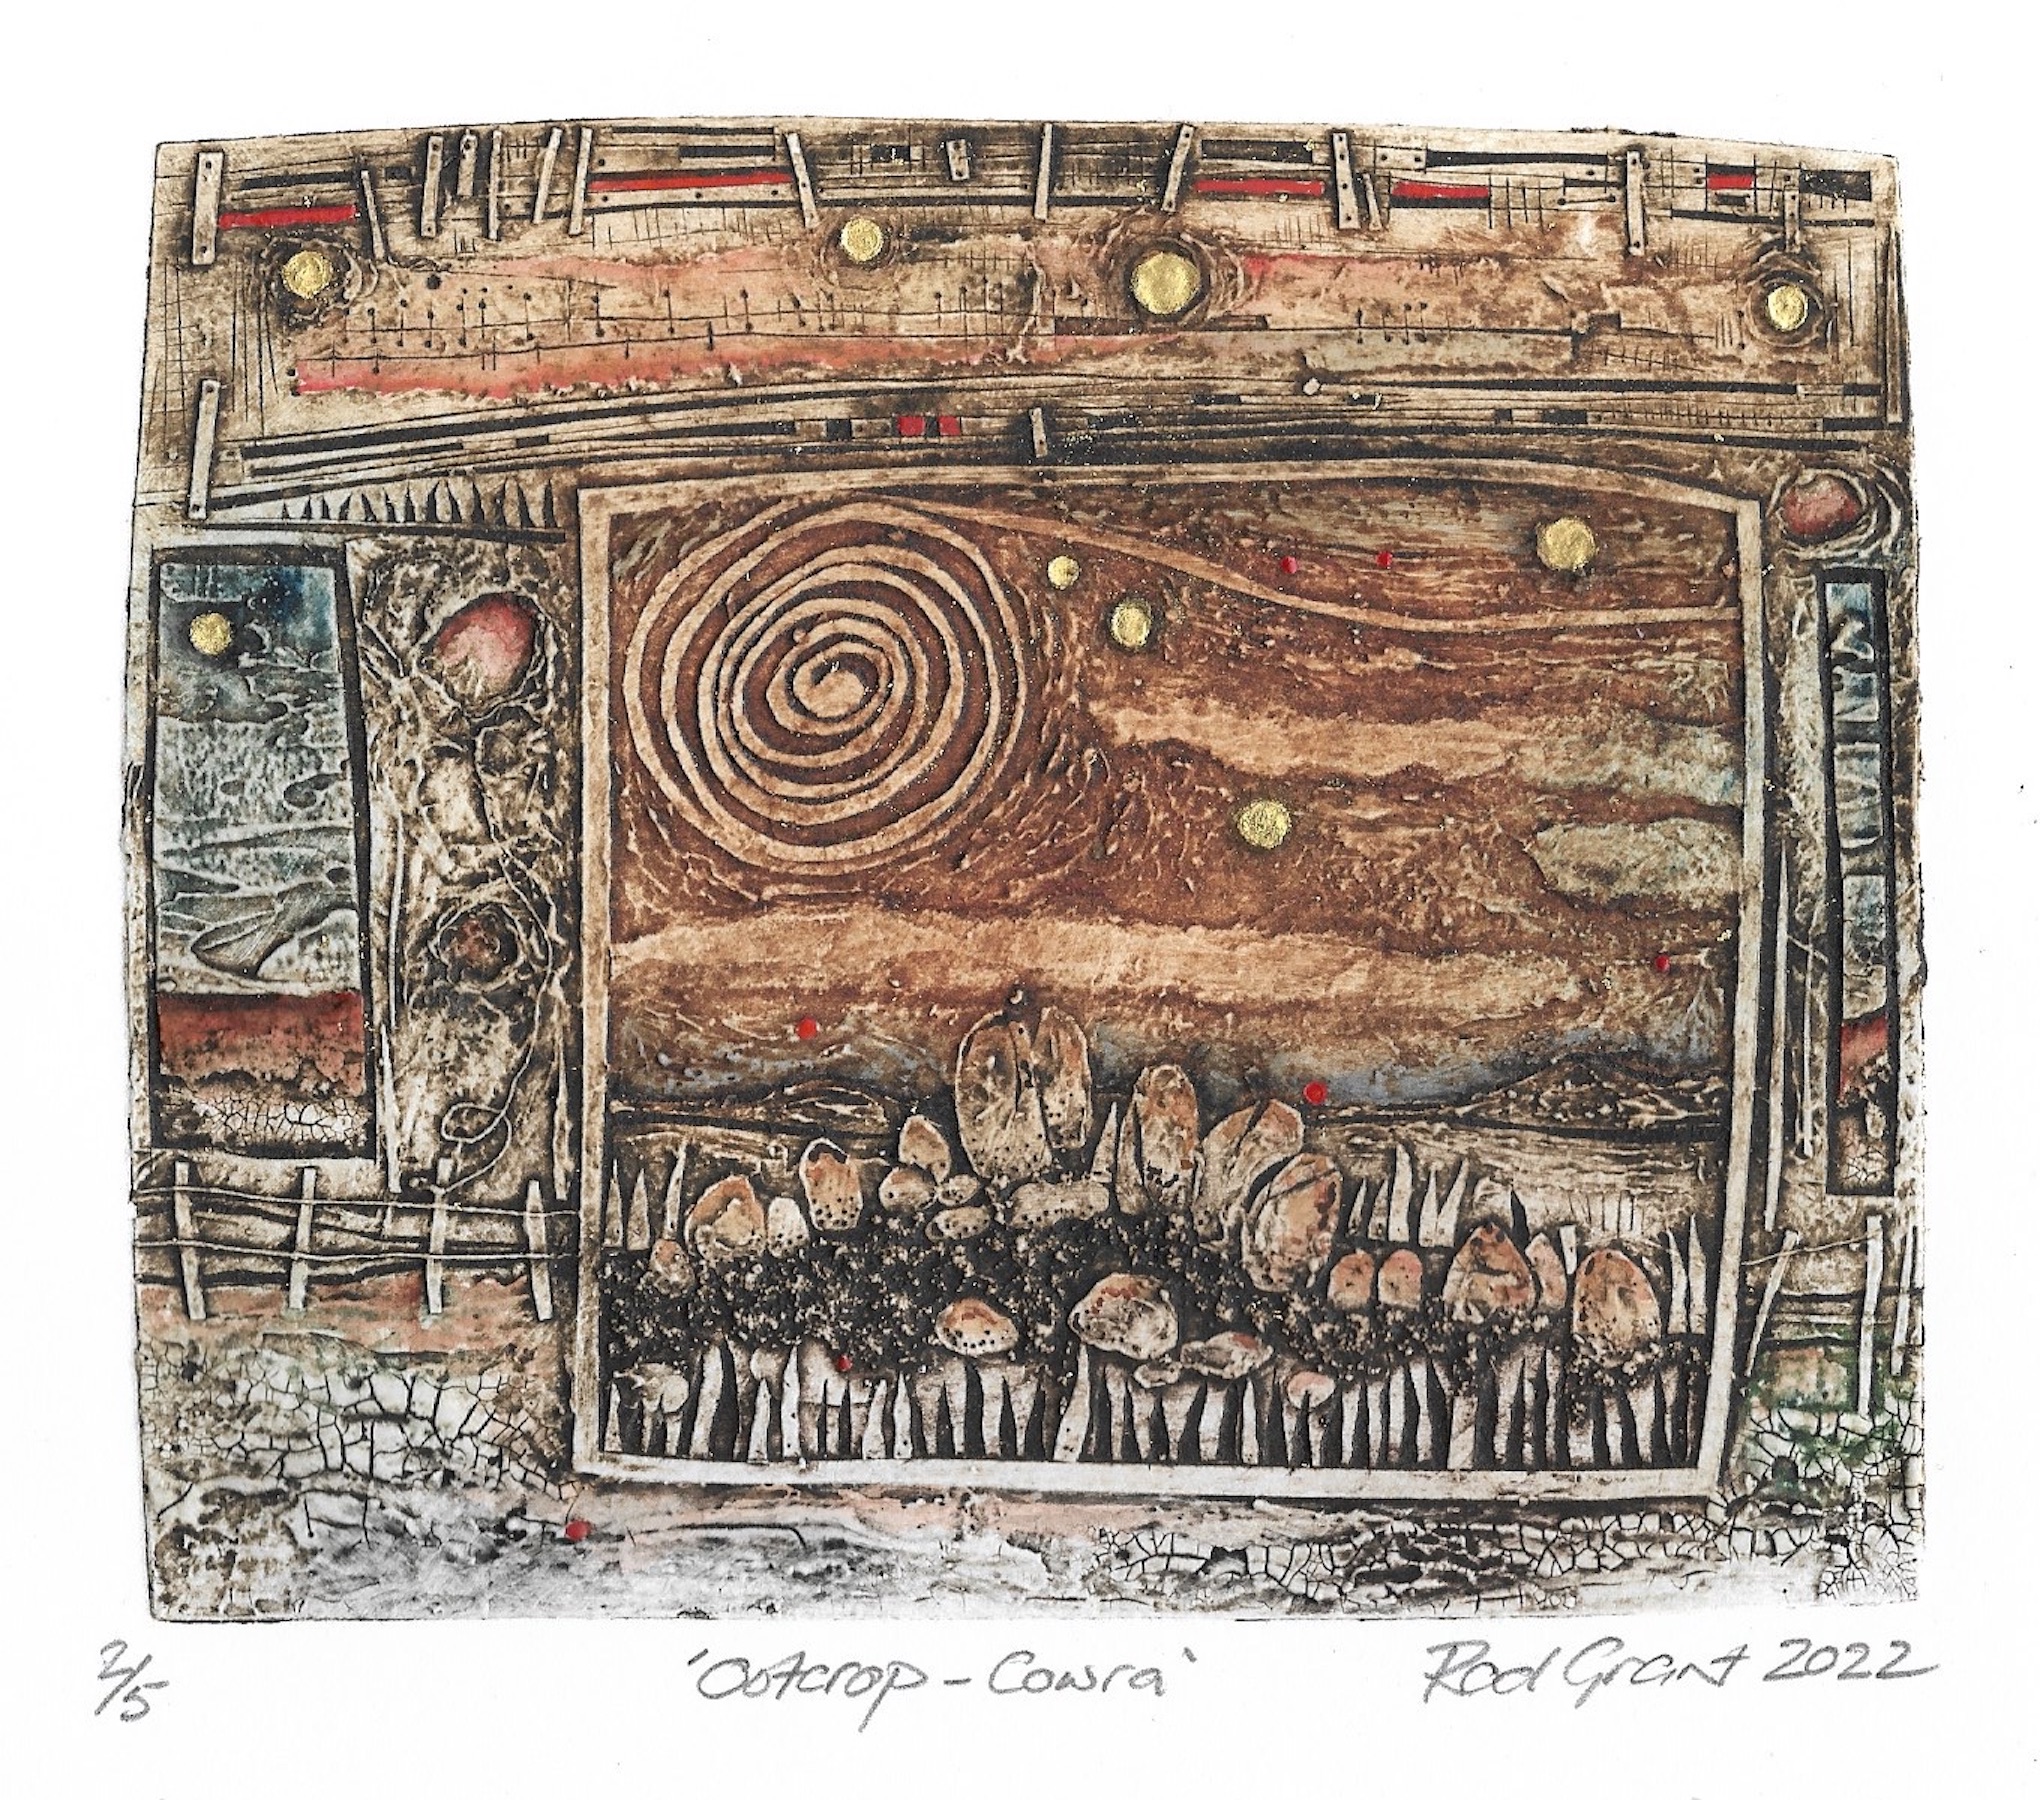 Outcrop - Cowra by Rod Grant | Lethbridge 20000 2023 Finalists | Lethbridge Gallery